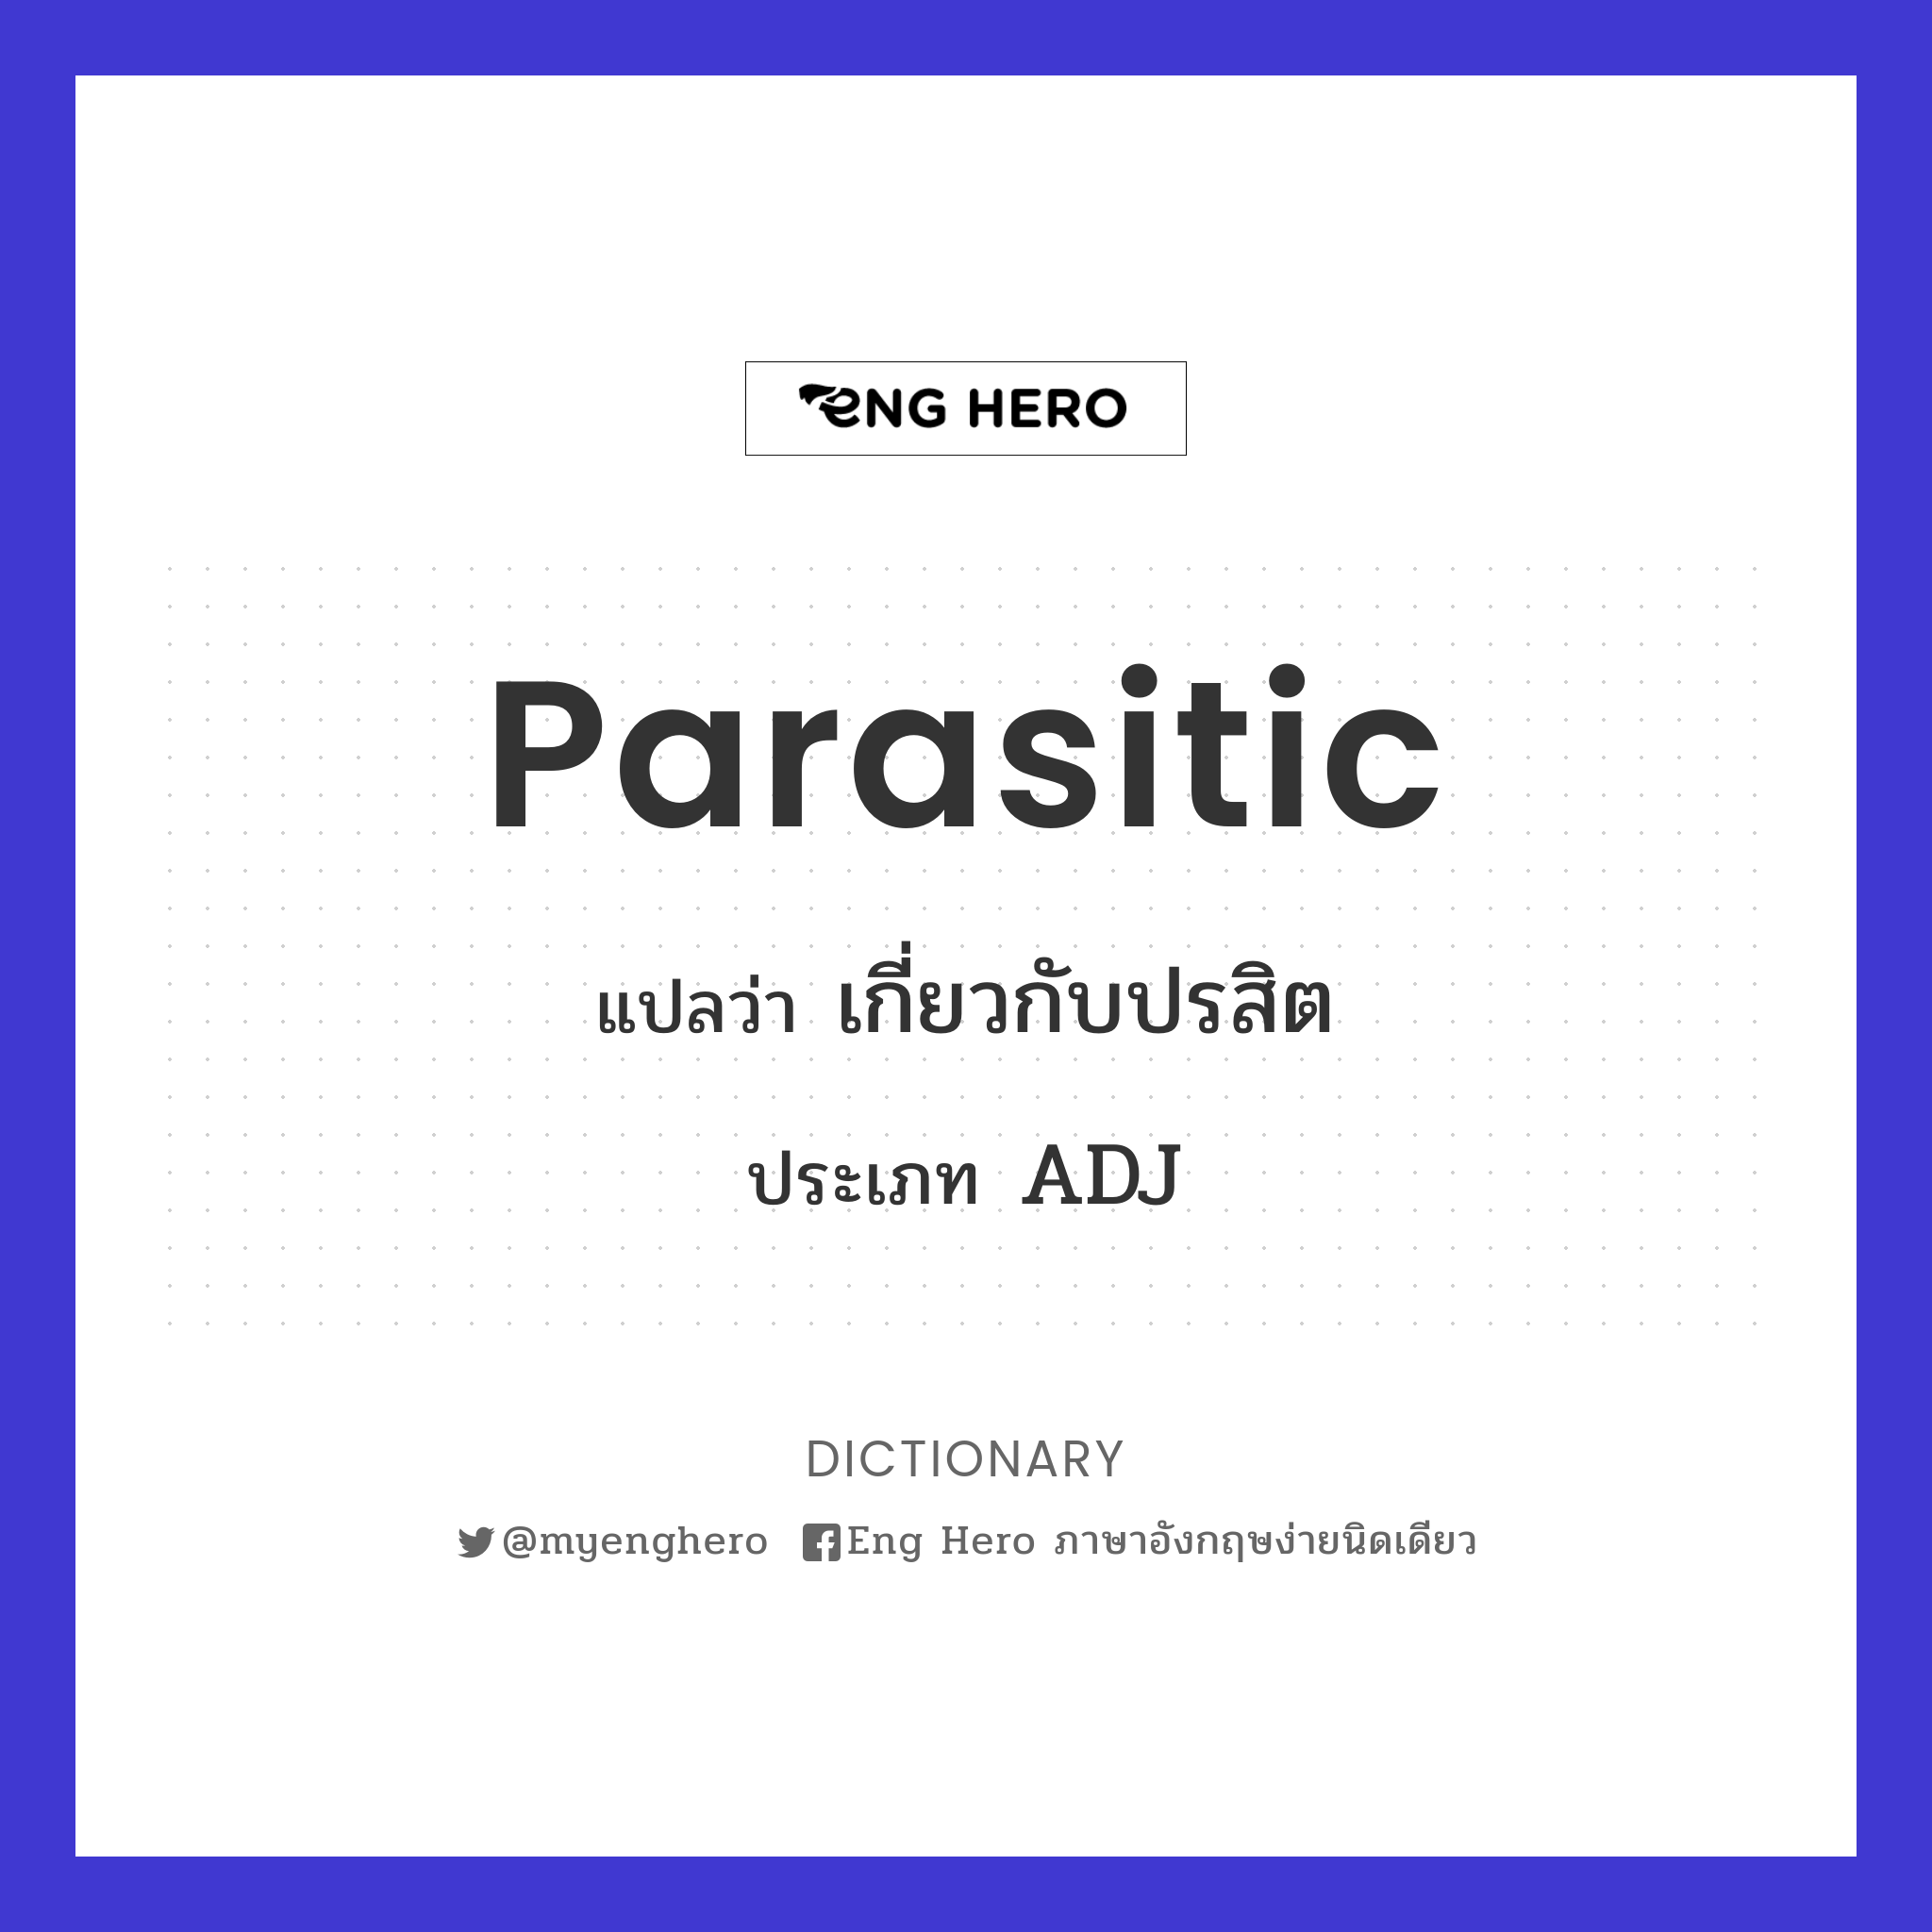 parasitic